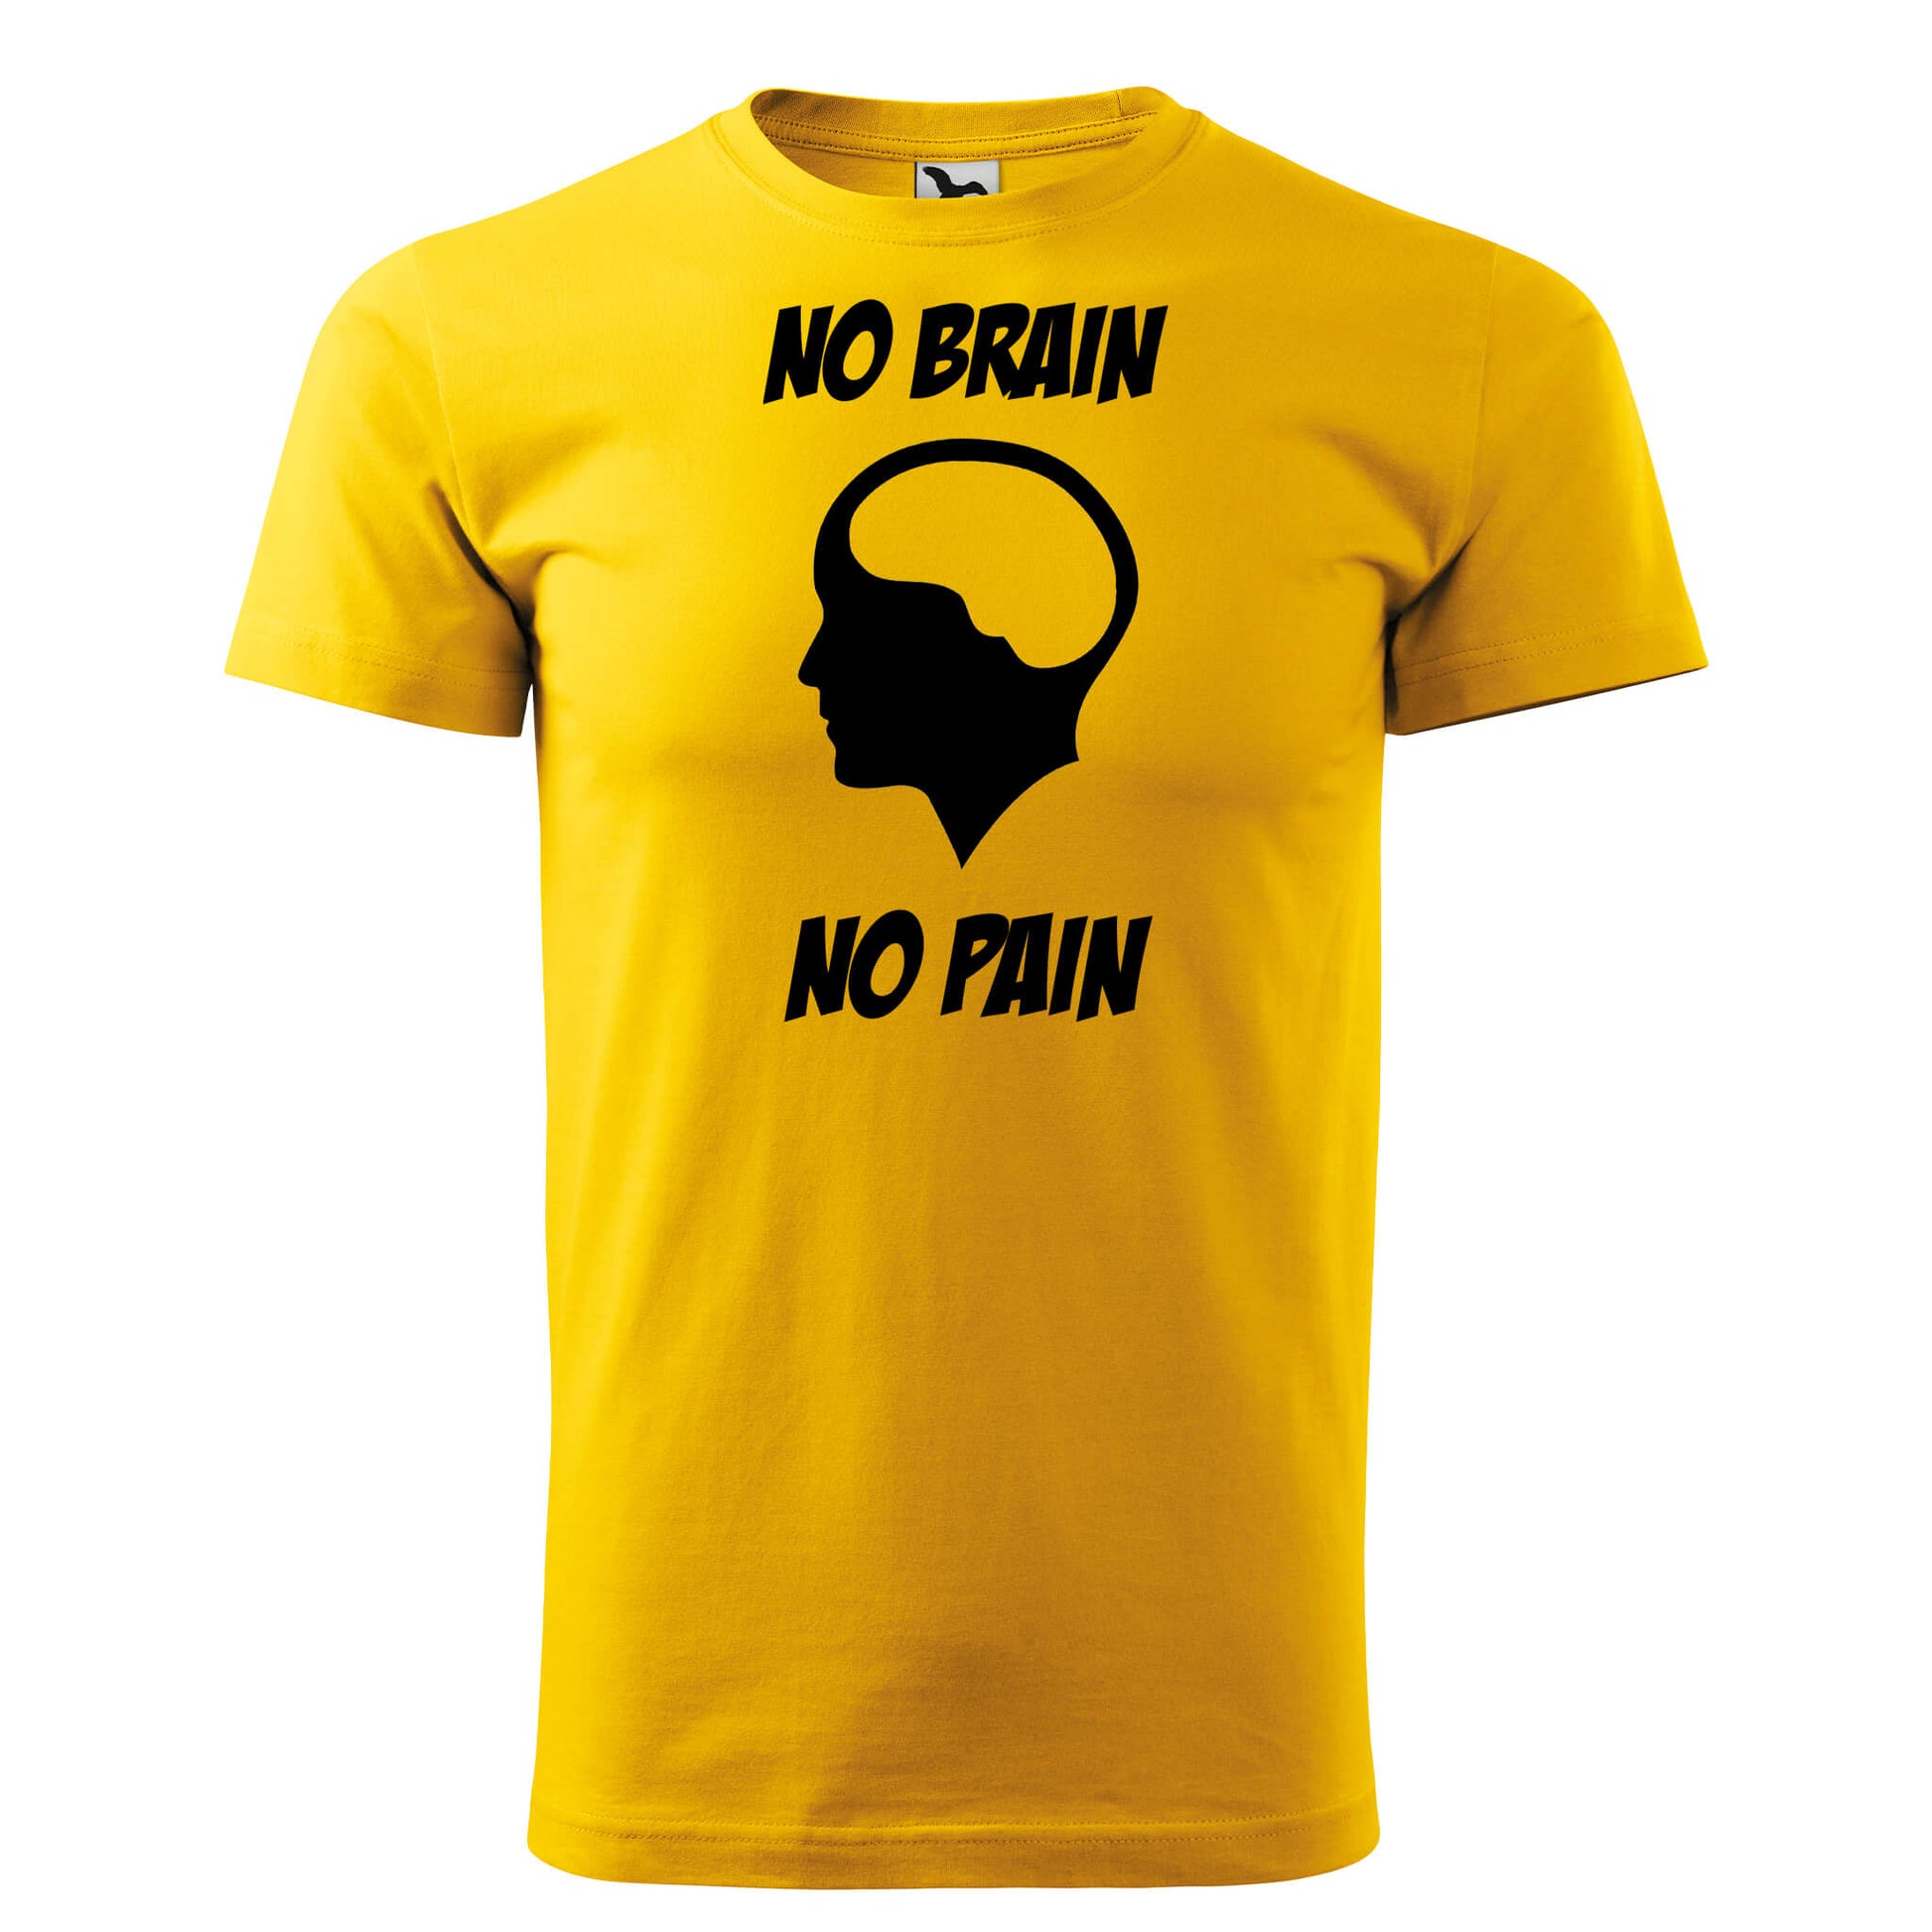 T-shirt - No brain no pain - rvdesignprint